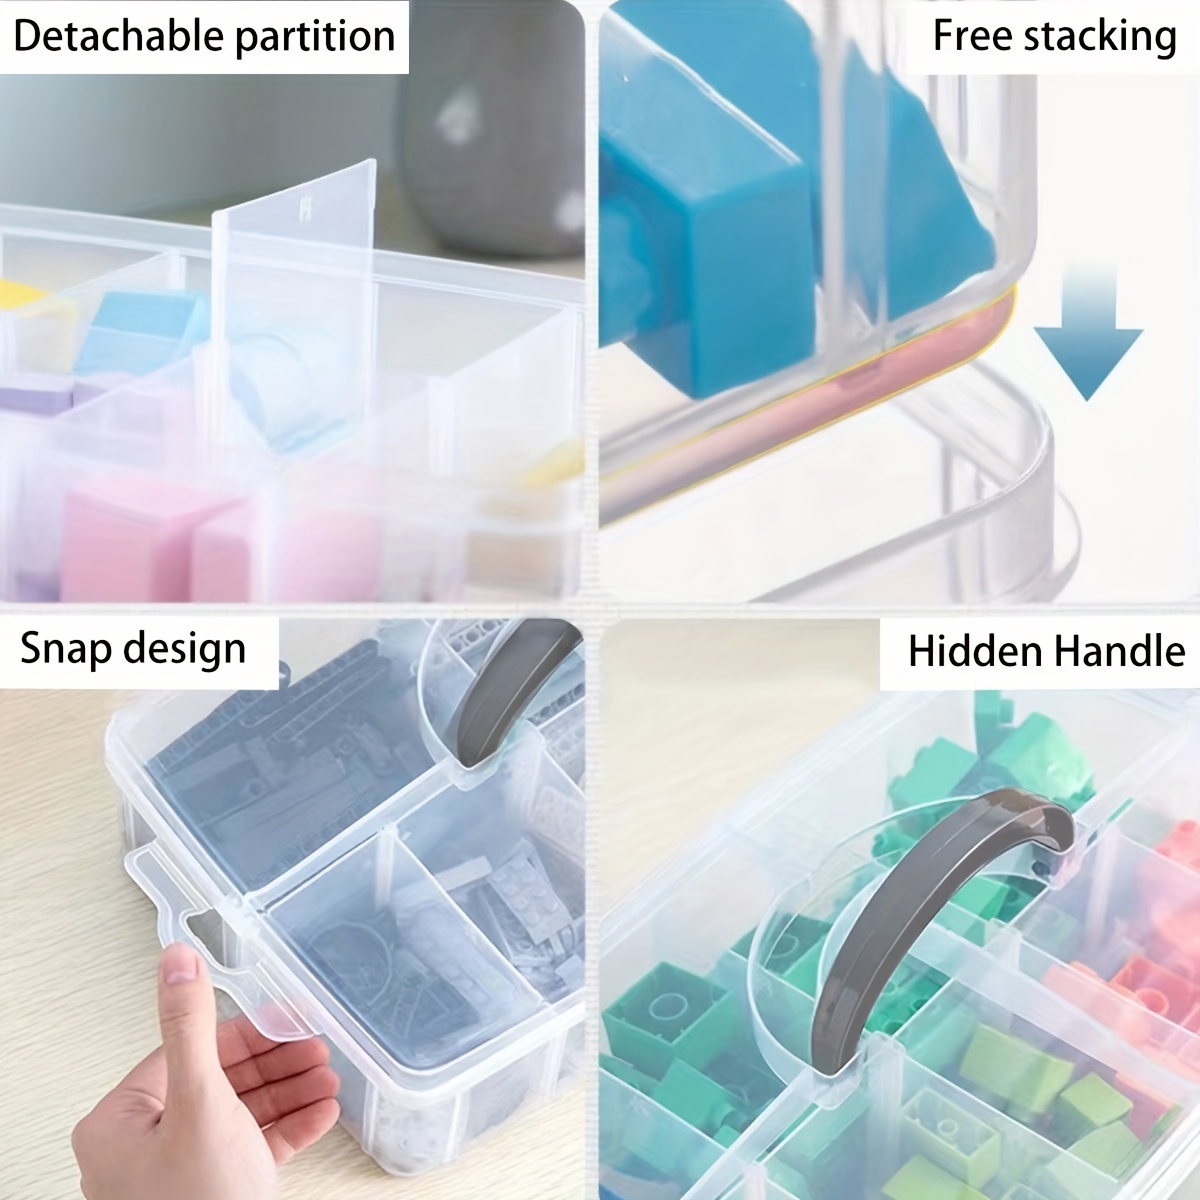 3-Tier Stackable Plastic Craft Box Organizer Storage Container w